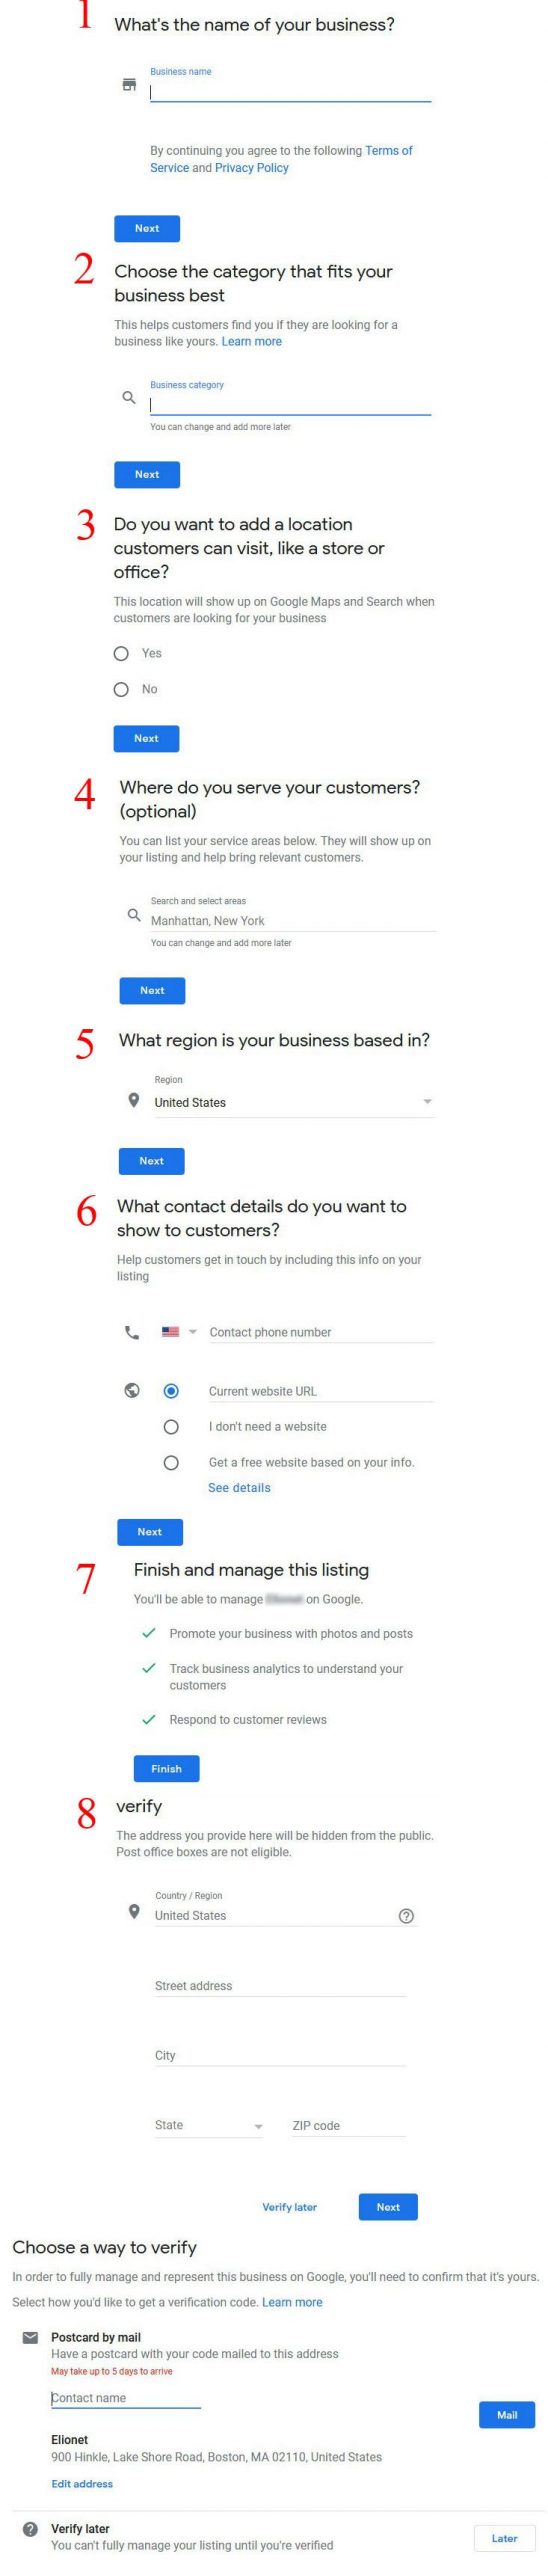 google my business verification process